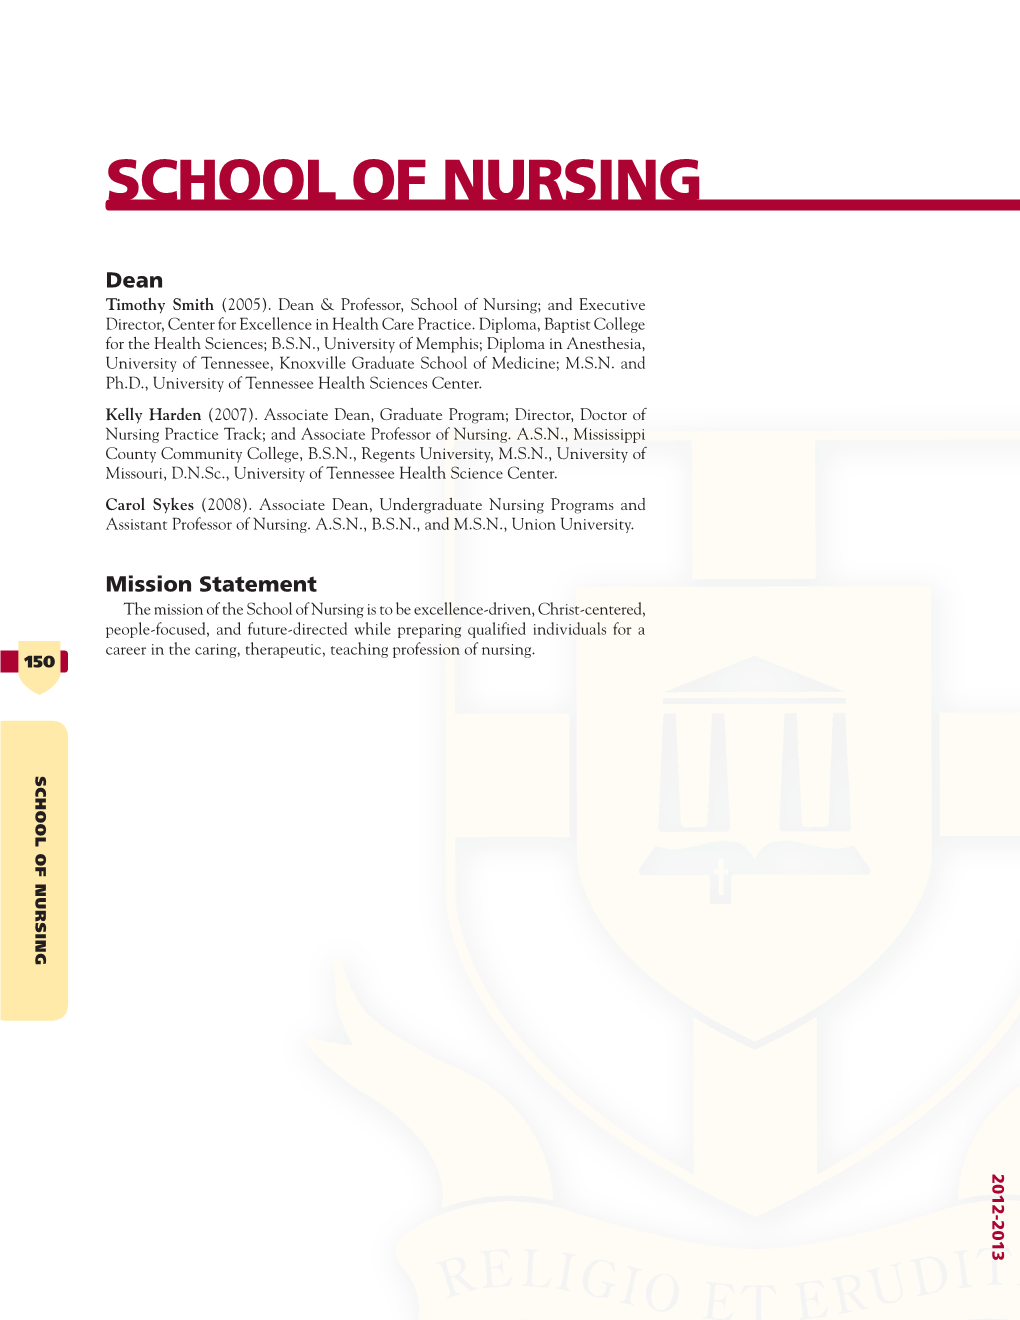 School of Nursing